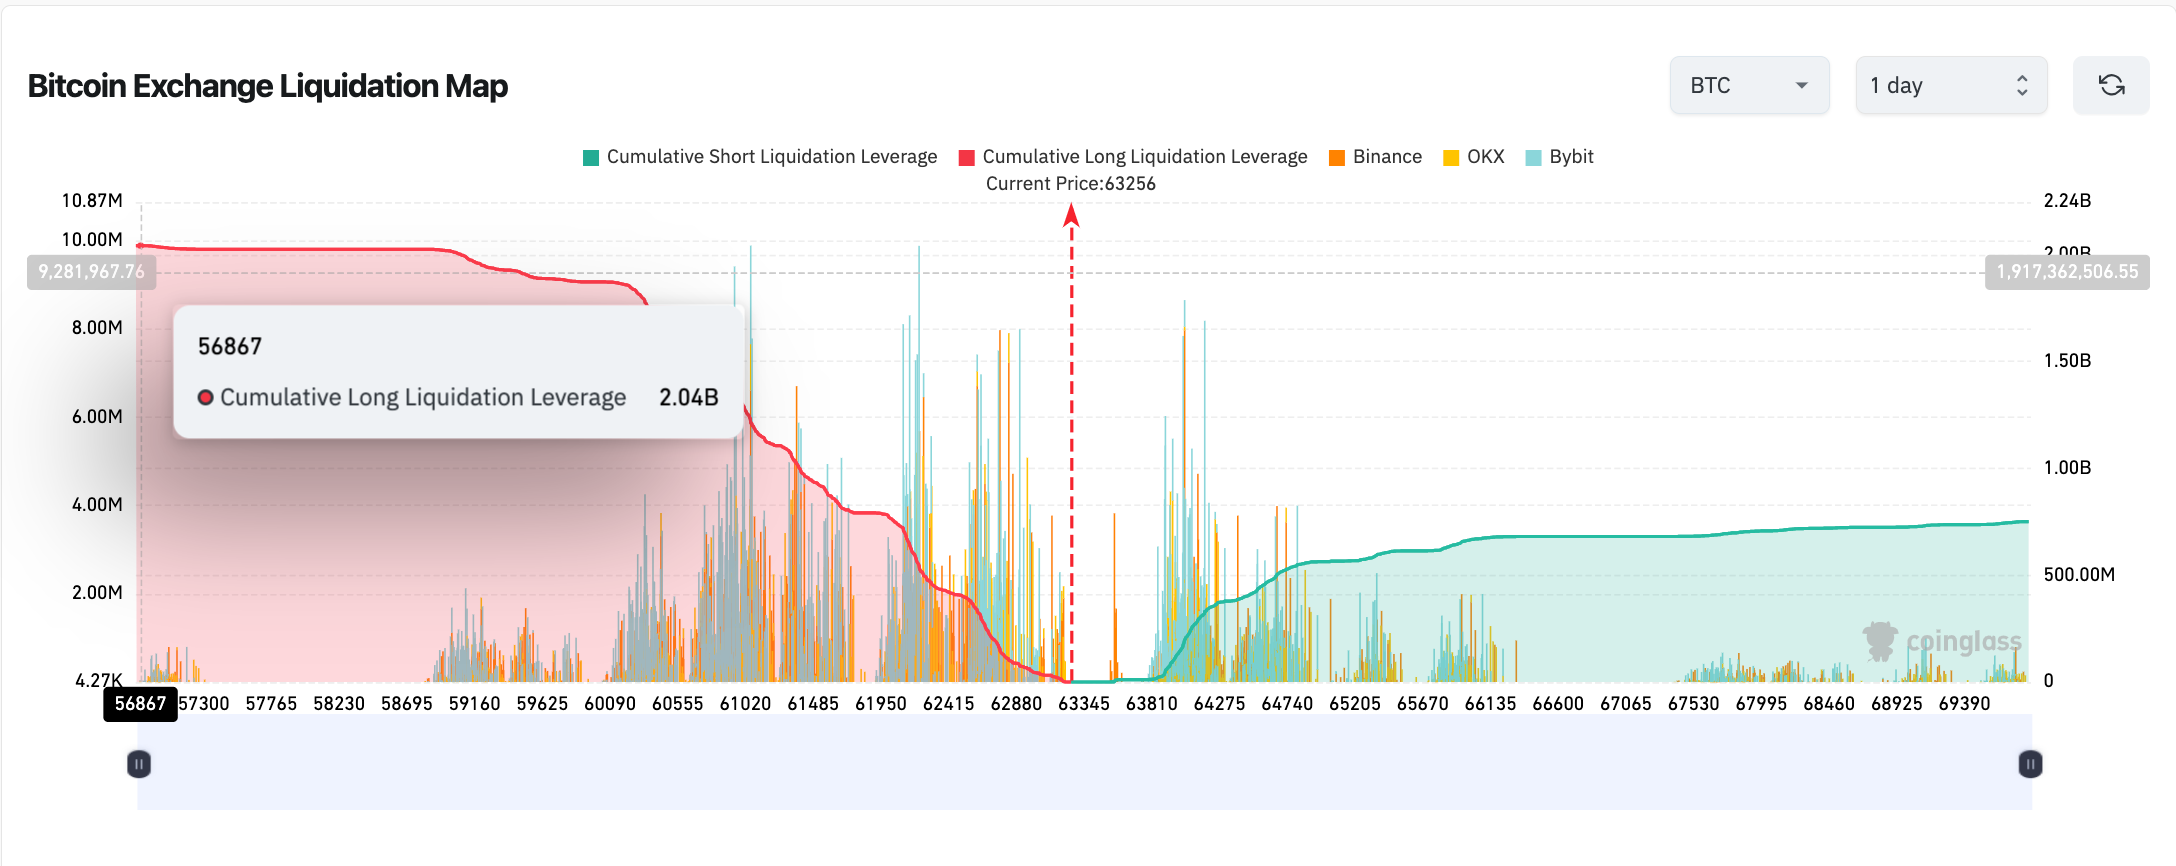 Bitcoin Price vs. BTC Liquidation Map | Source: Coinglass